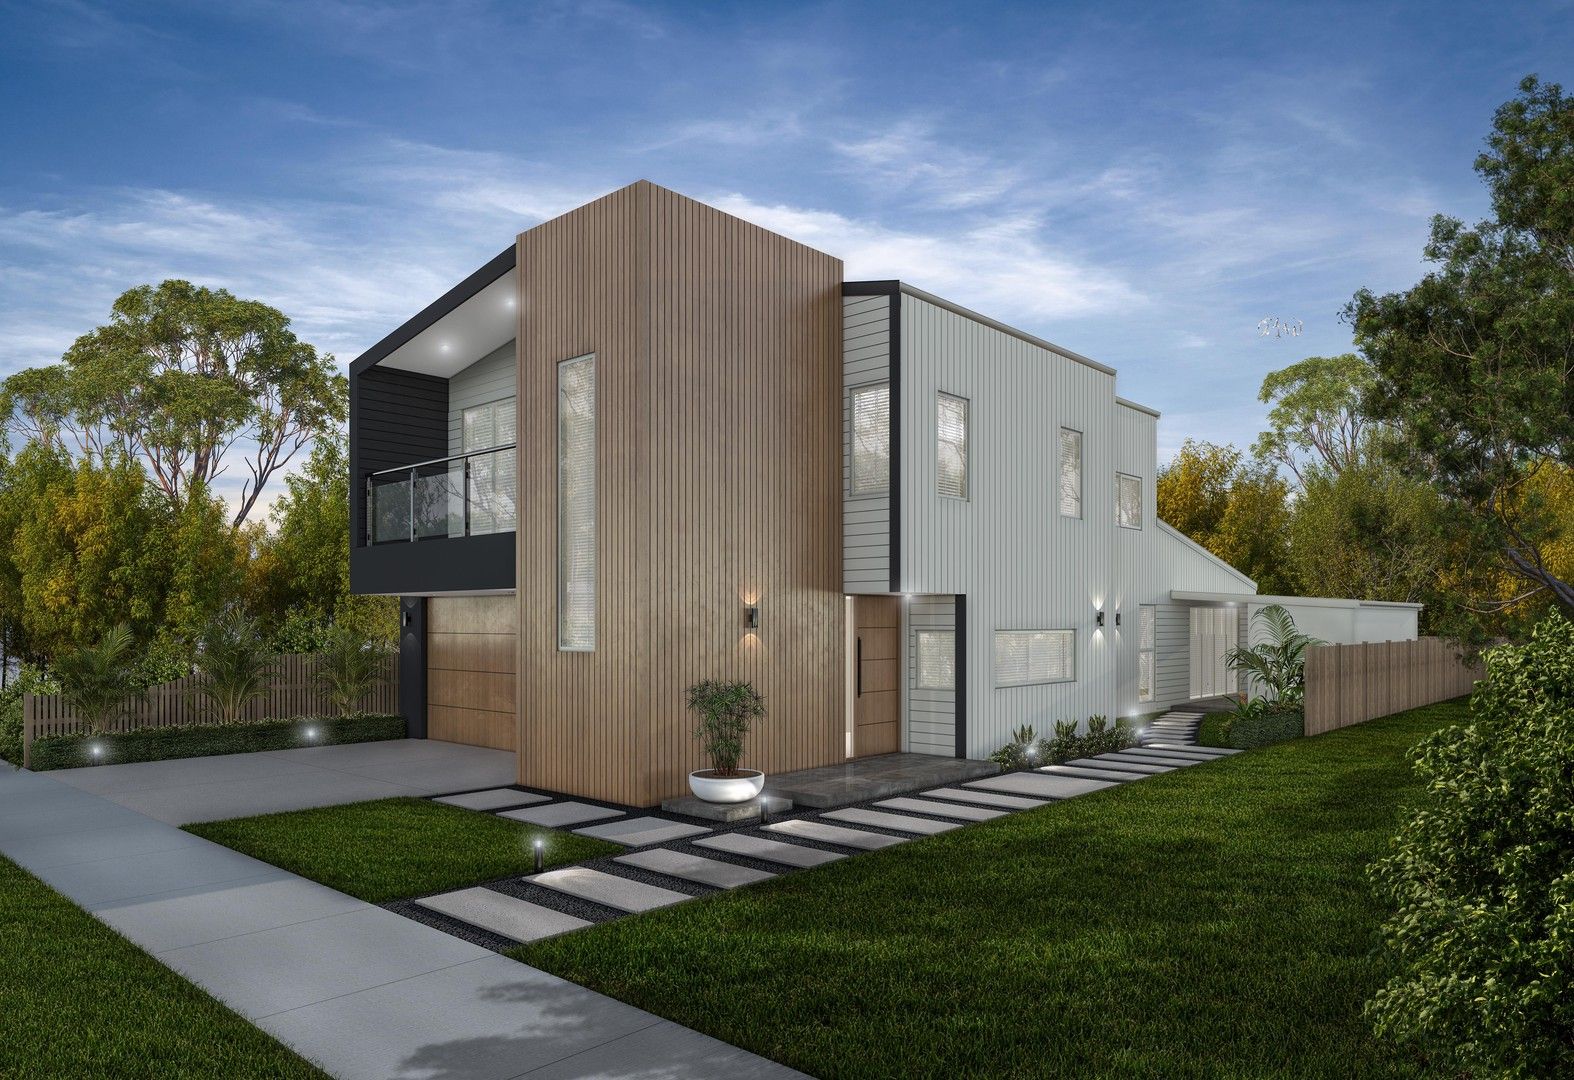 4 bedrooms New House & Land in Lot 36/213 Harrington Road DENNINGTON VIC, 3280